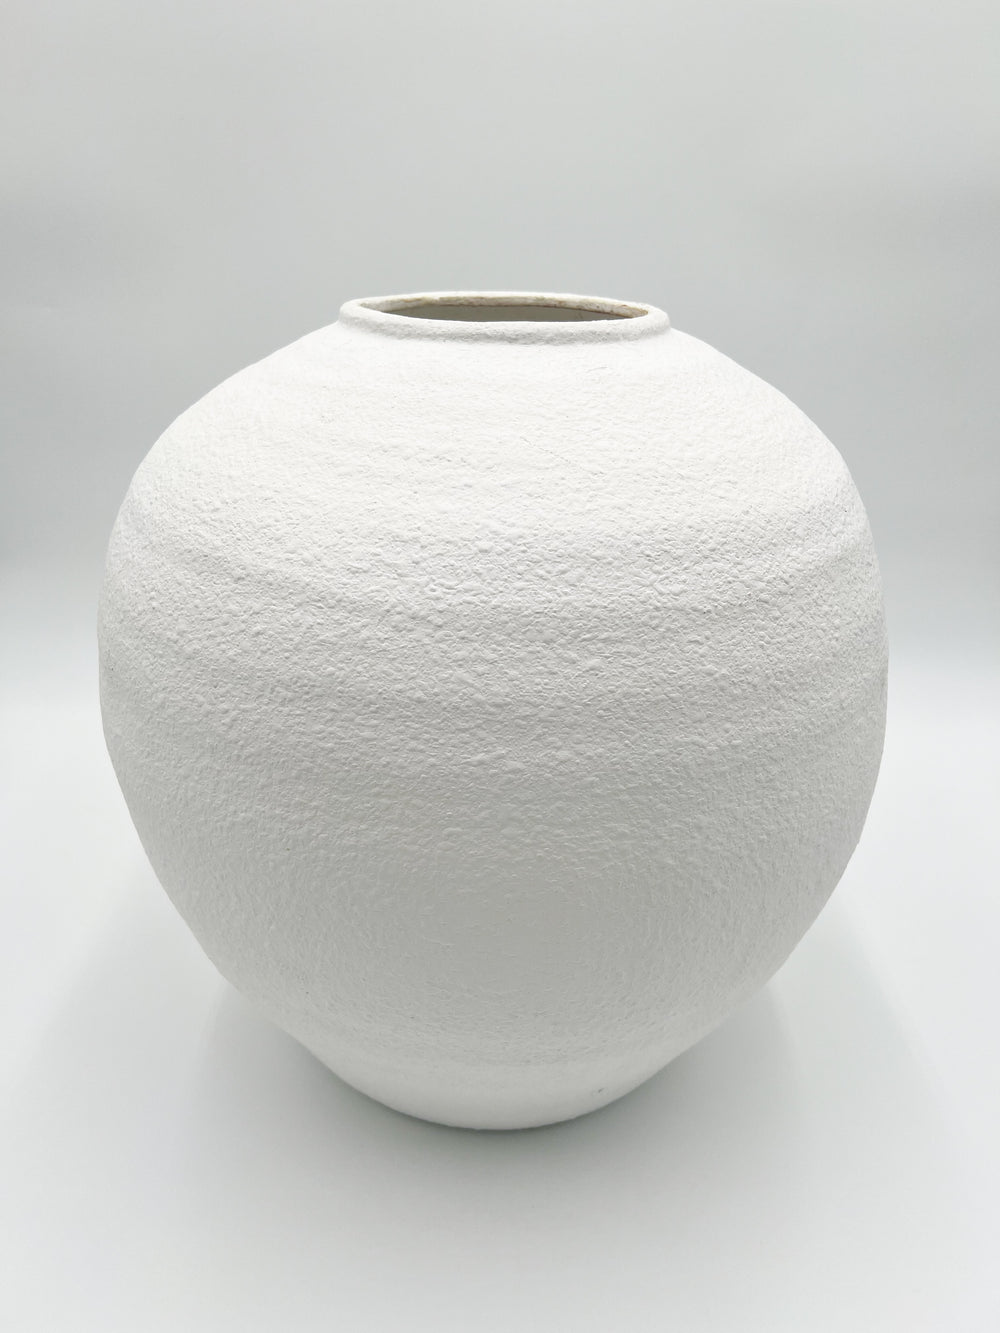 Gia White Cement Vase - Two sizes available